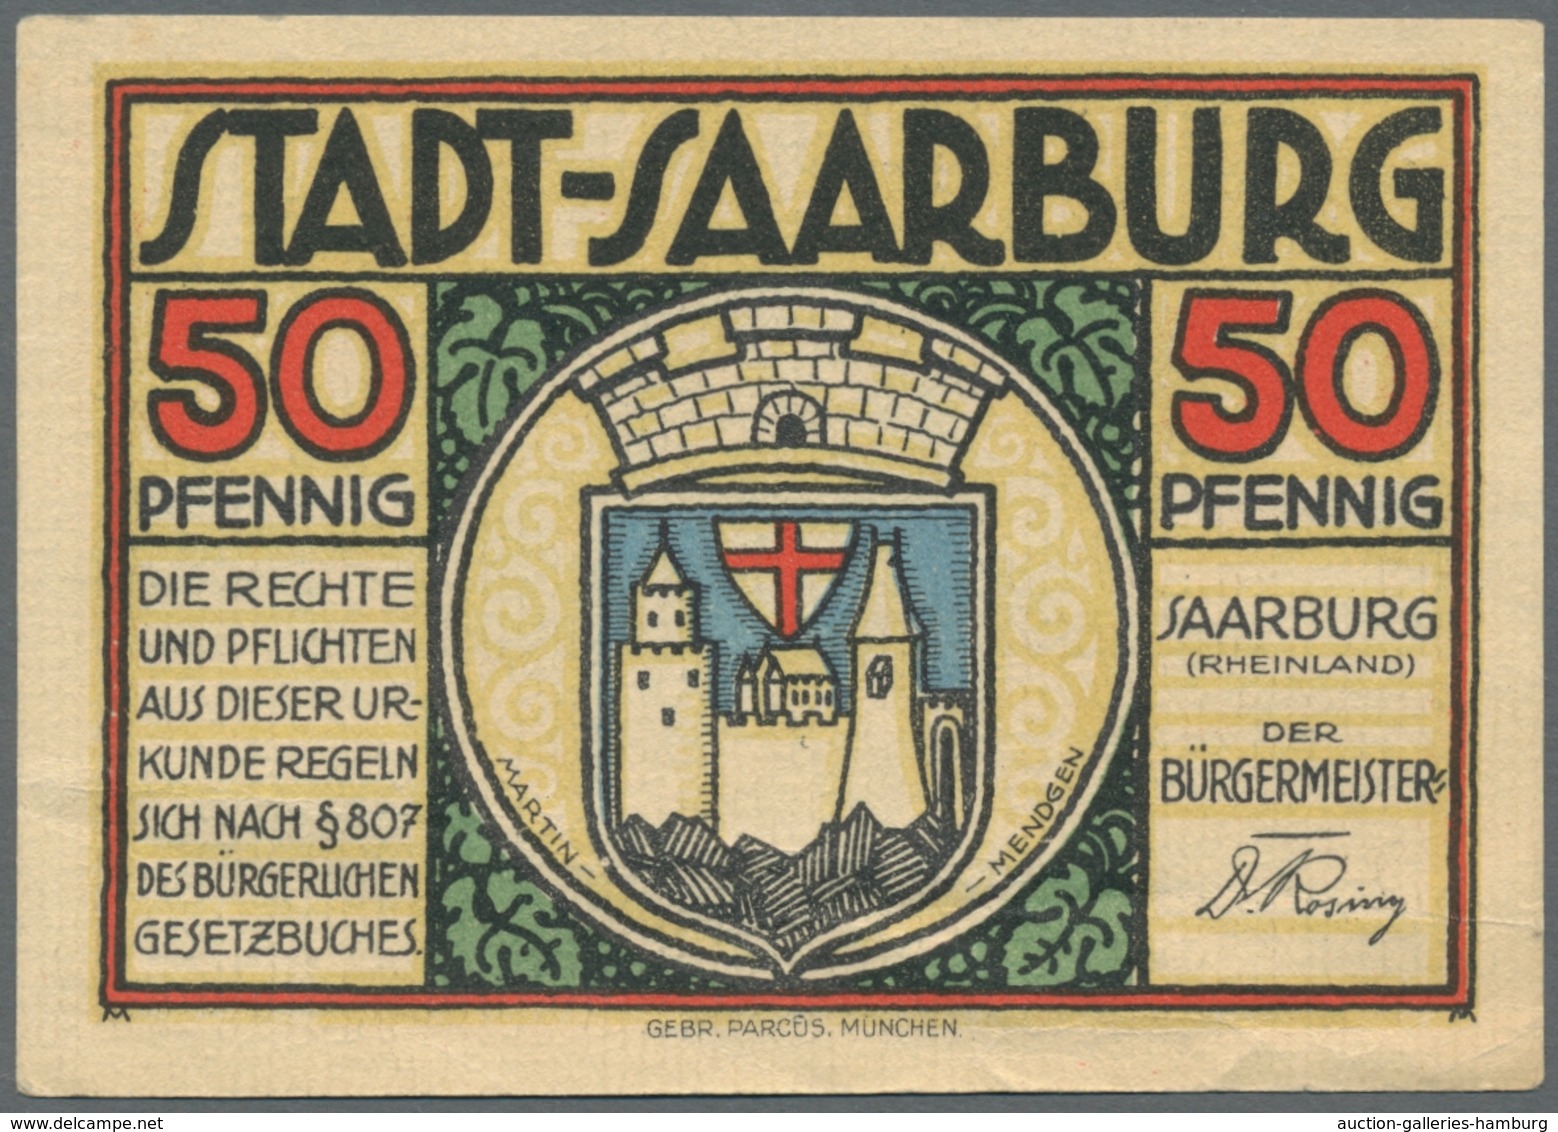 Deutsche Abstimmungsgebiete: Saargebiet: 1855-1917 (ca.) - SAARBURG/SAARGEMÜND/SAAR-UNION, hübsche Z